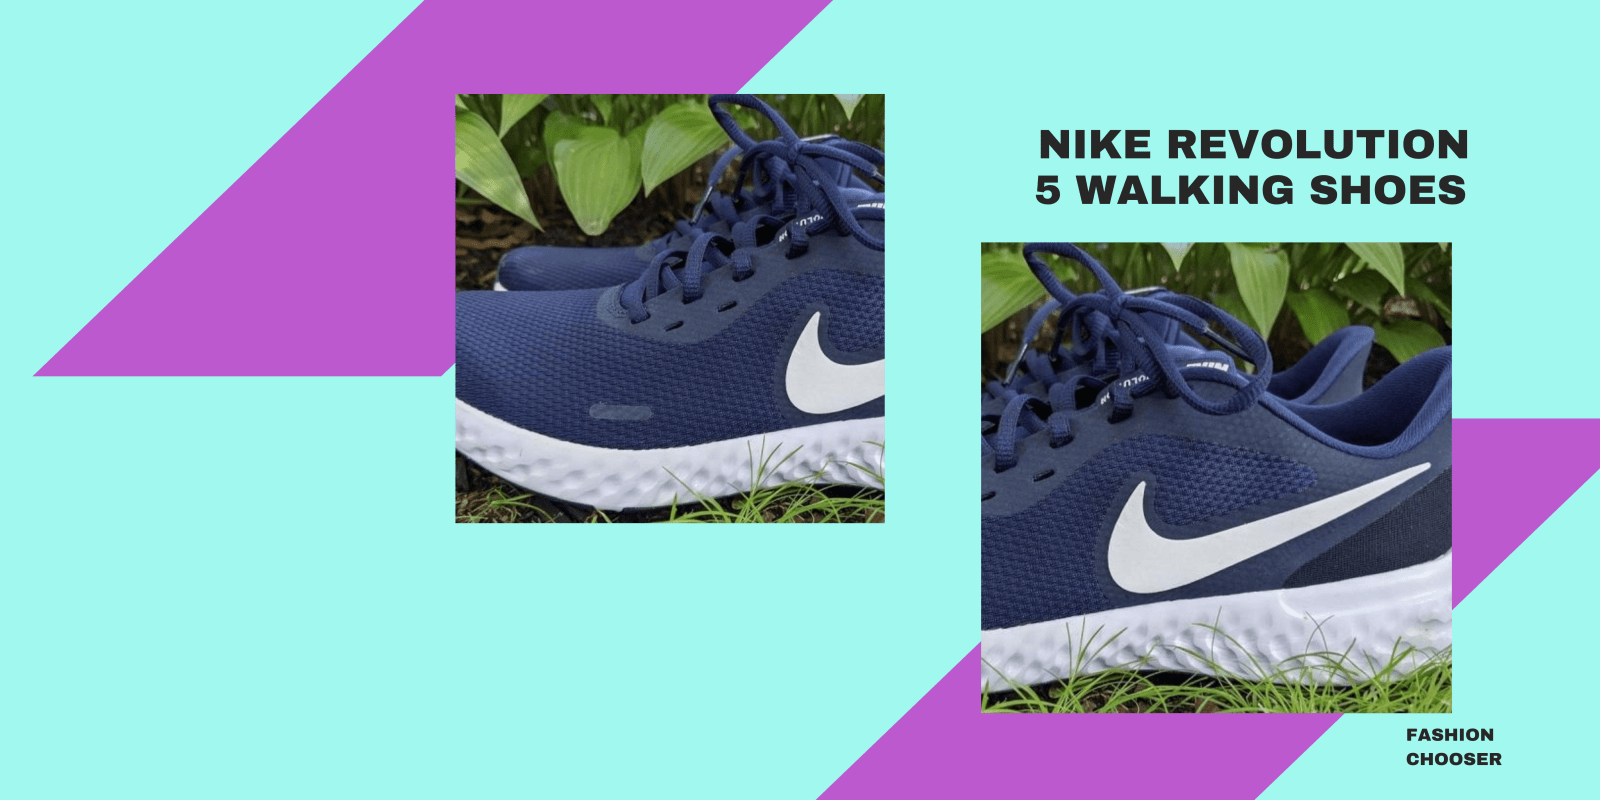 Nike Revolution 5 Men's Road Running Shoes|Facts|Deals|FASHION CHOOSER